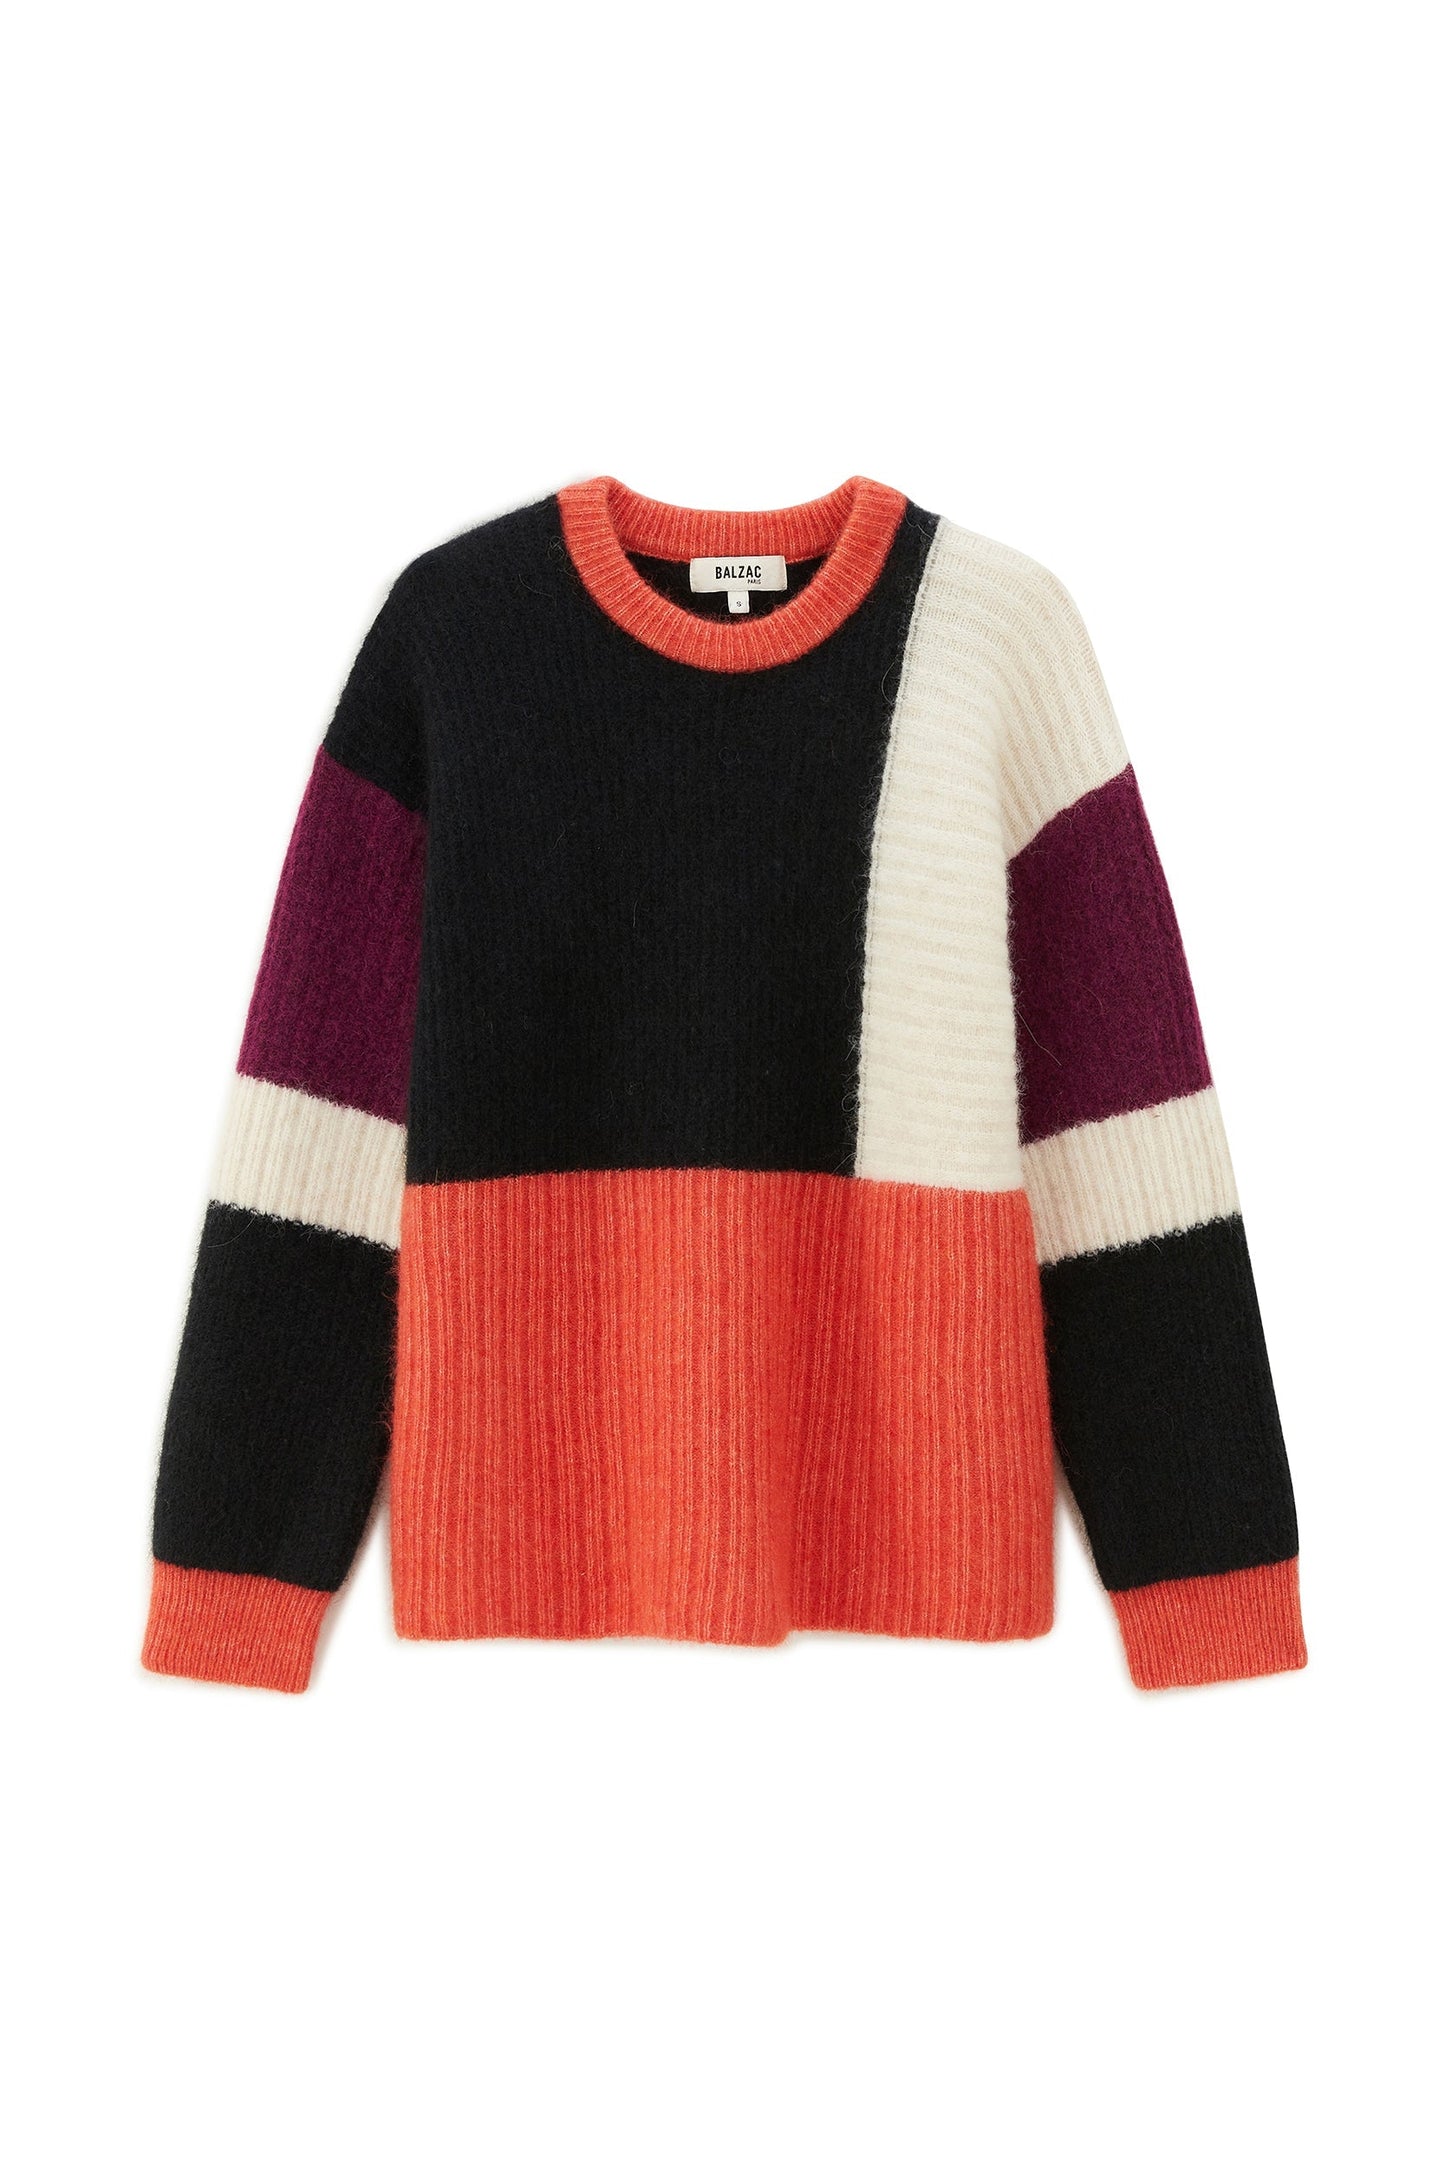 Oscar multicolor navy and orange sweater